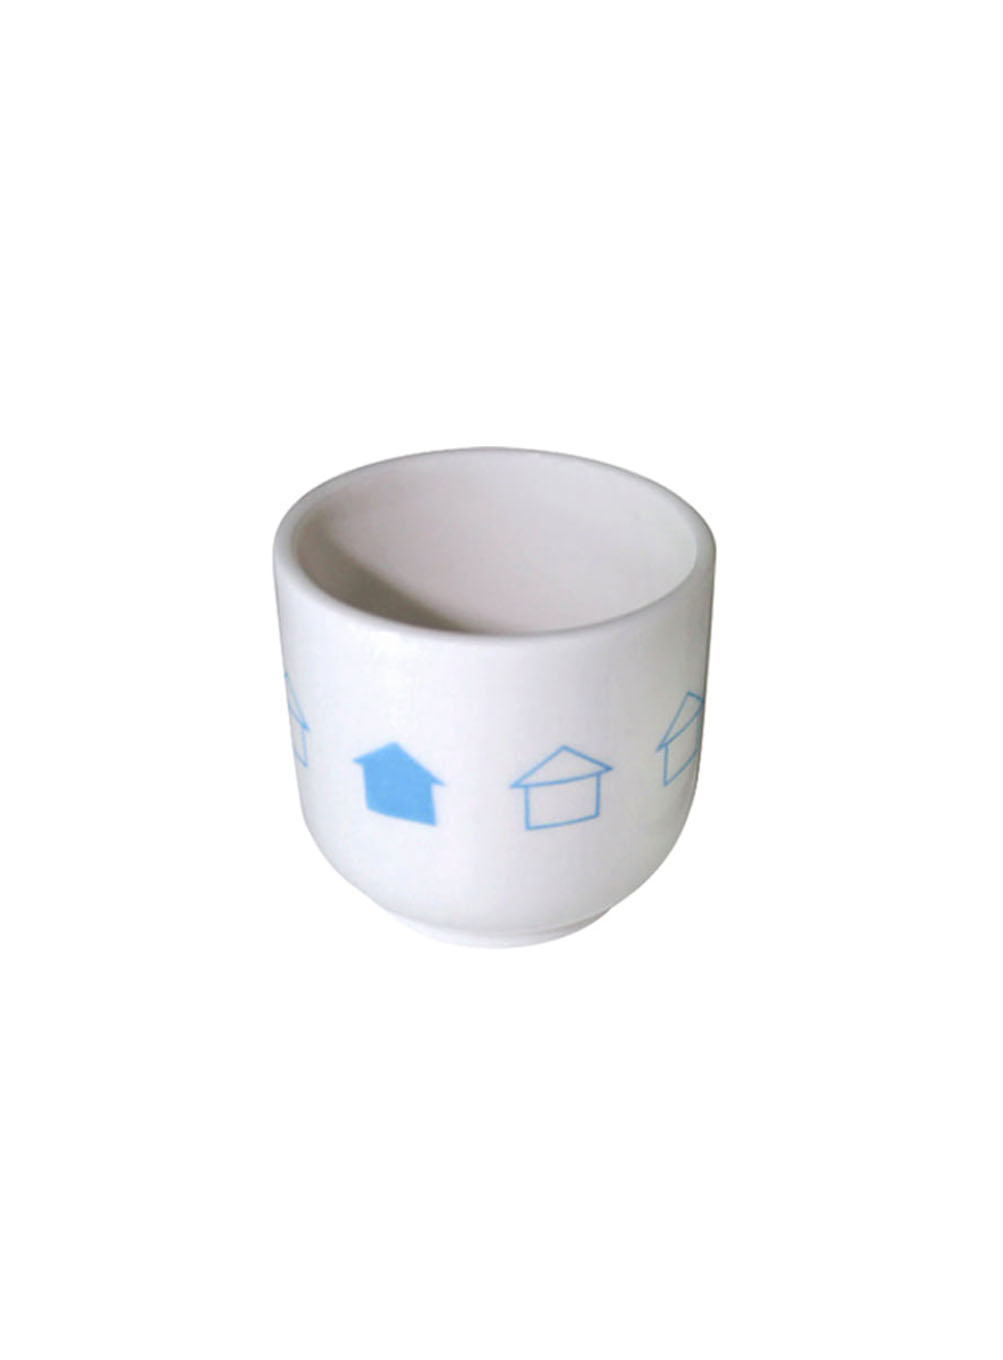 My mini house cup